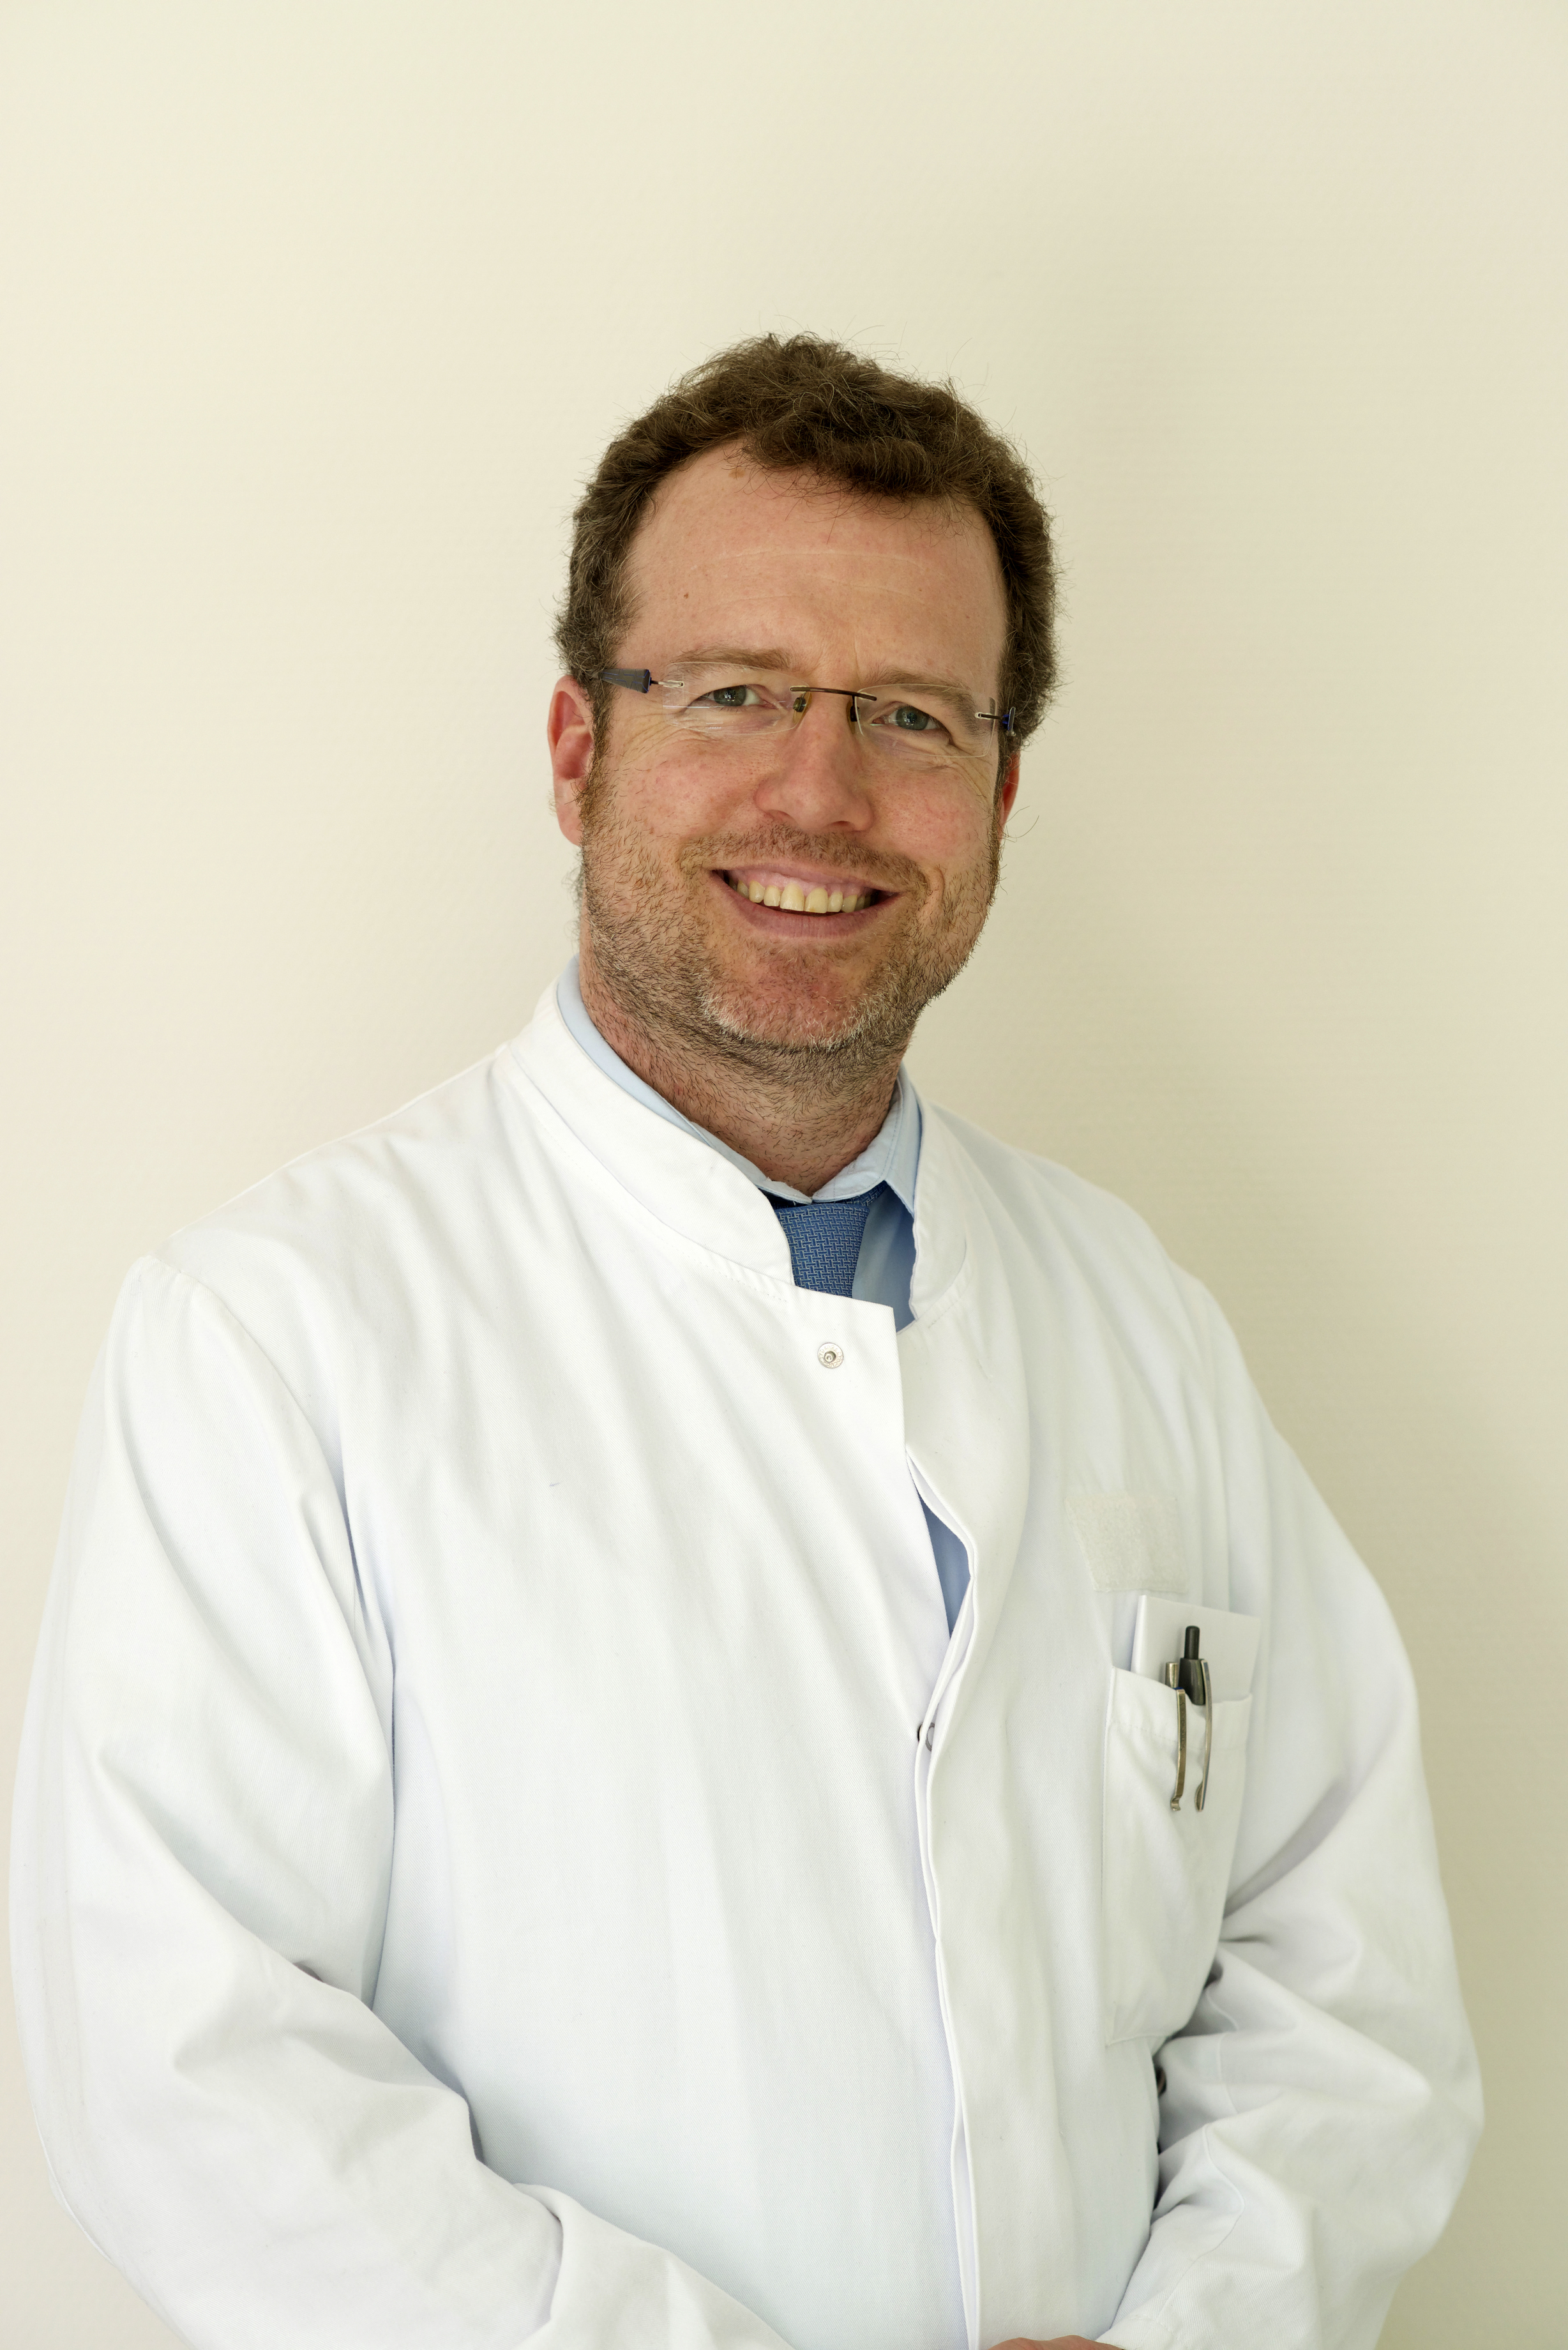 PD Dr. Karel Frasch (BKH Donauwörth)